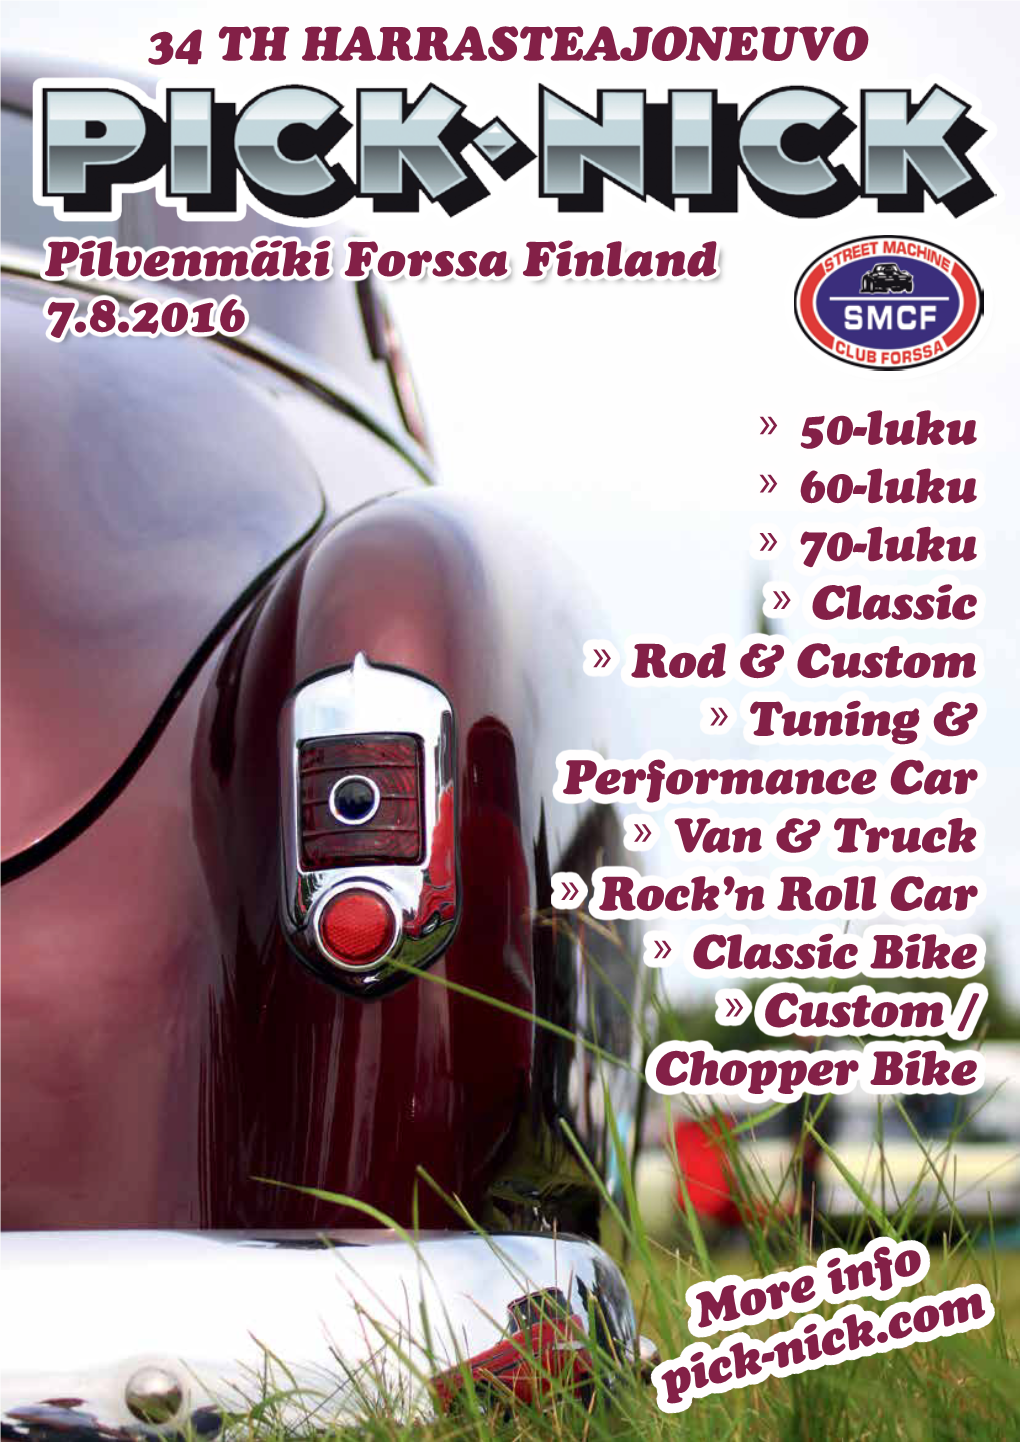 70-Luku » Classic » Rod & Custom » Tuning & Perfor